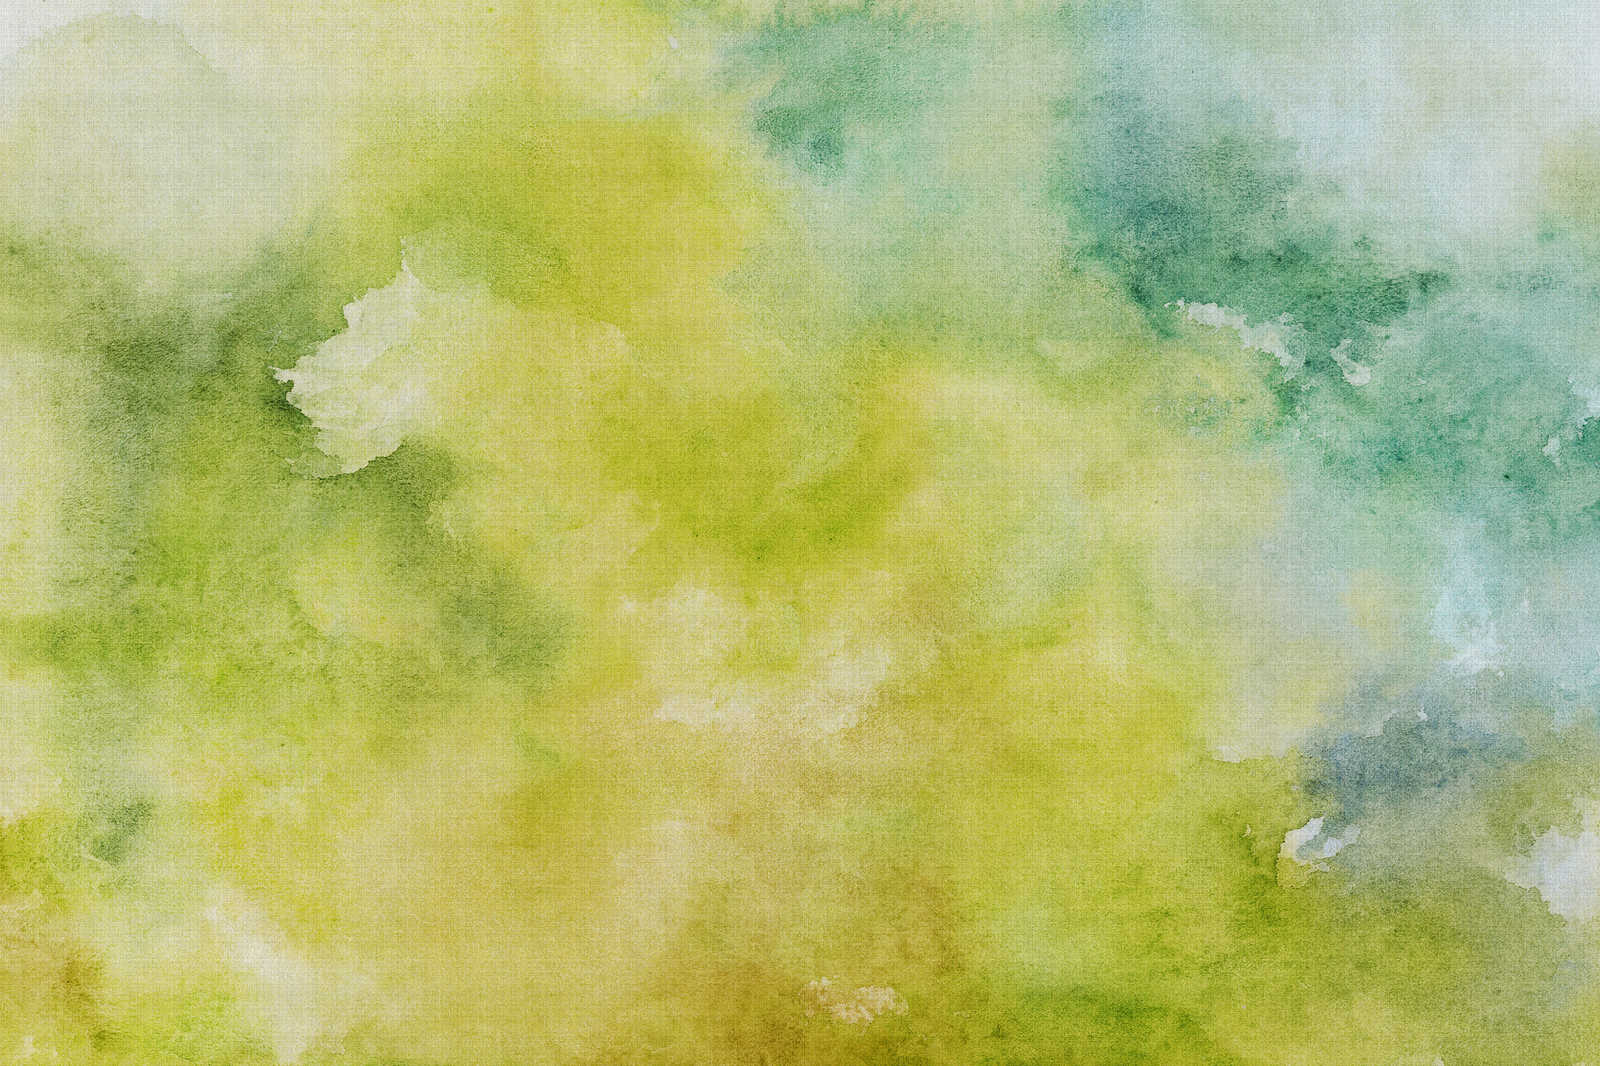             Watercolours 3 - Grünes Wasserfarben Motiv als Leinwandbild in naturleinen Optik – 0,90 m x 0,60 m
        